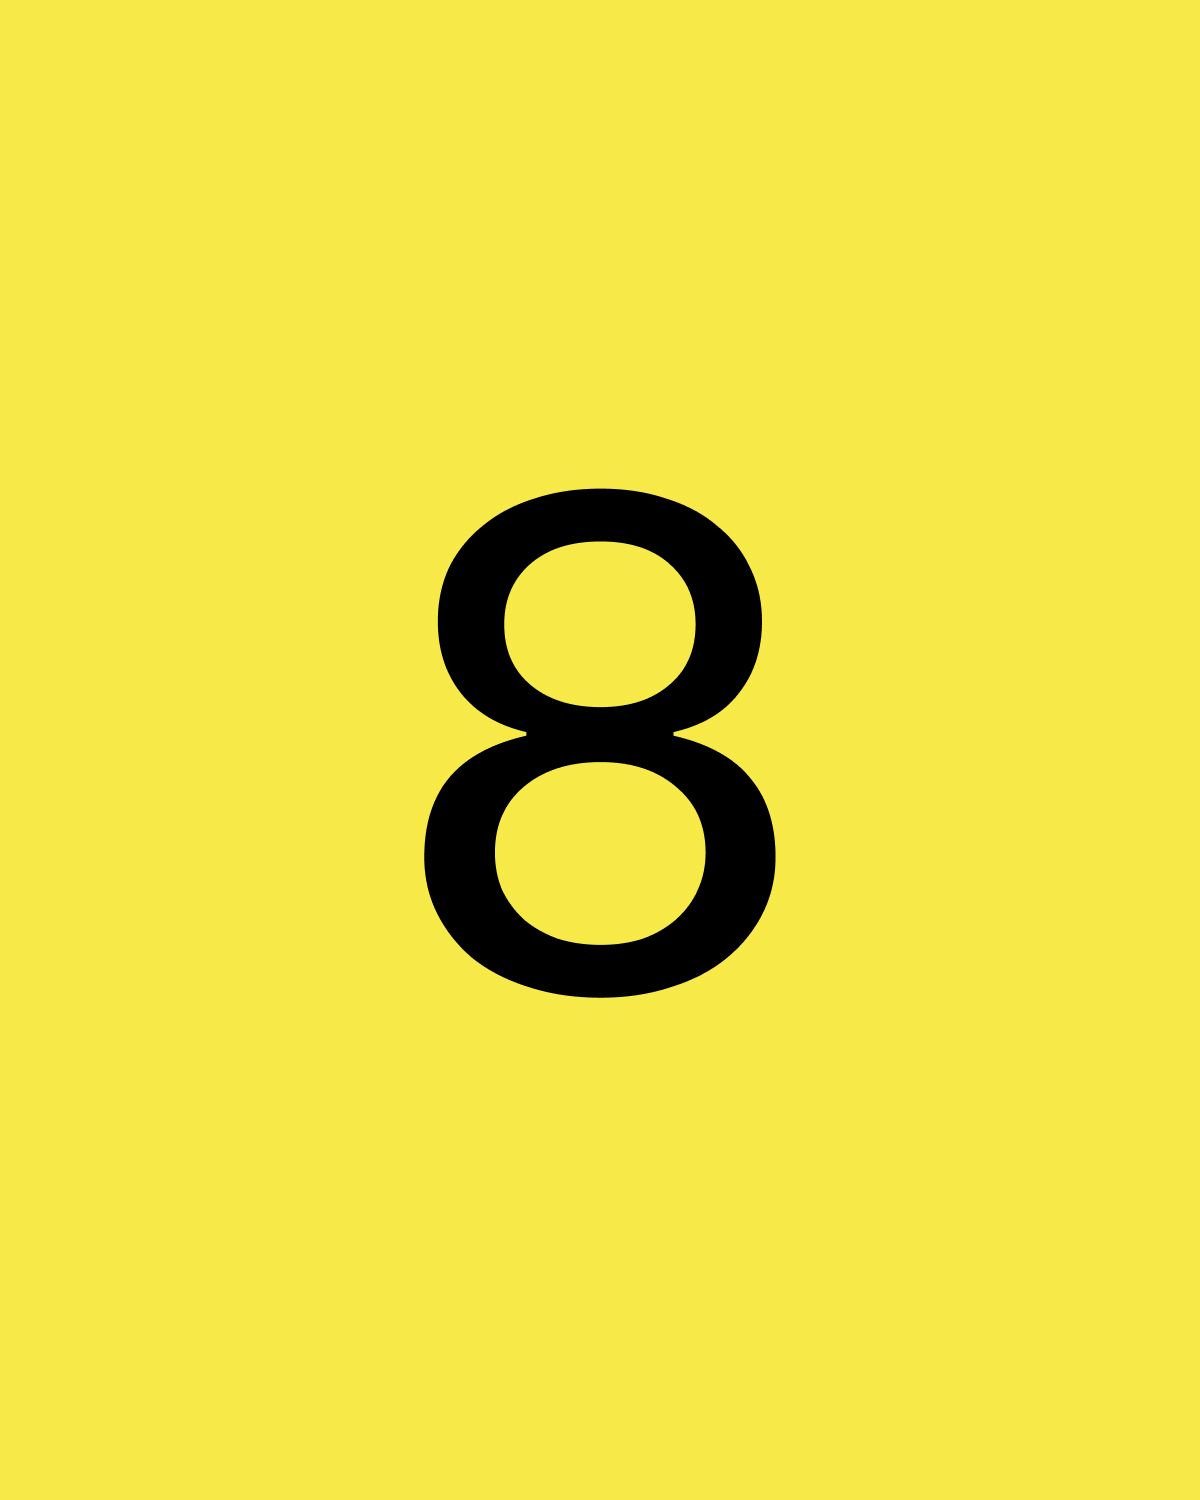 Black 8 on yellow background